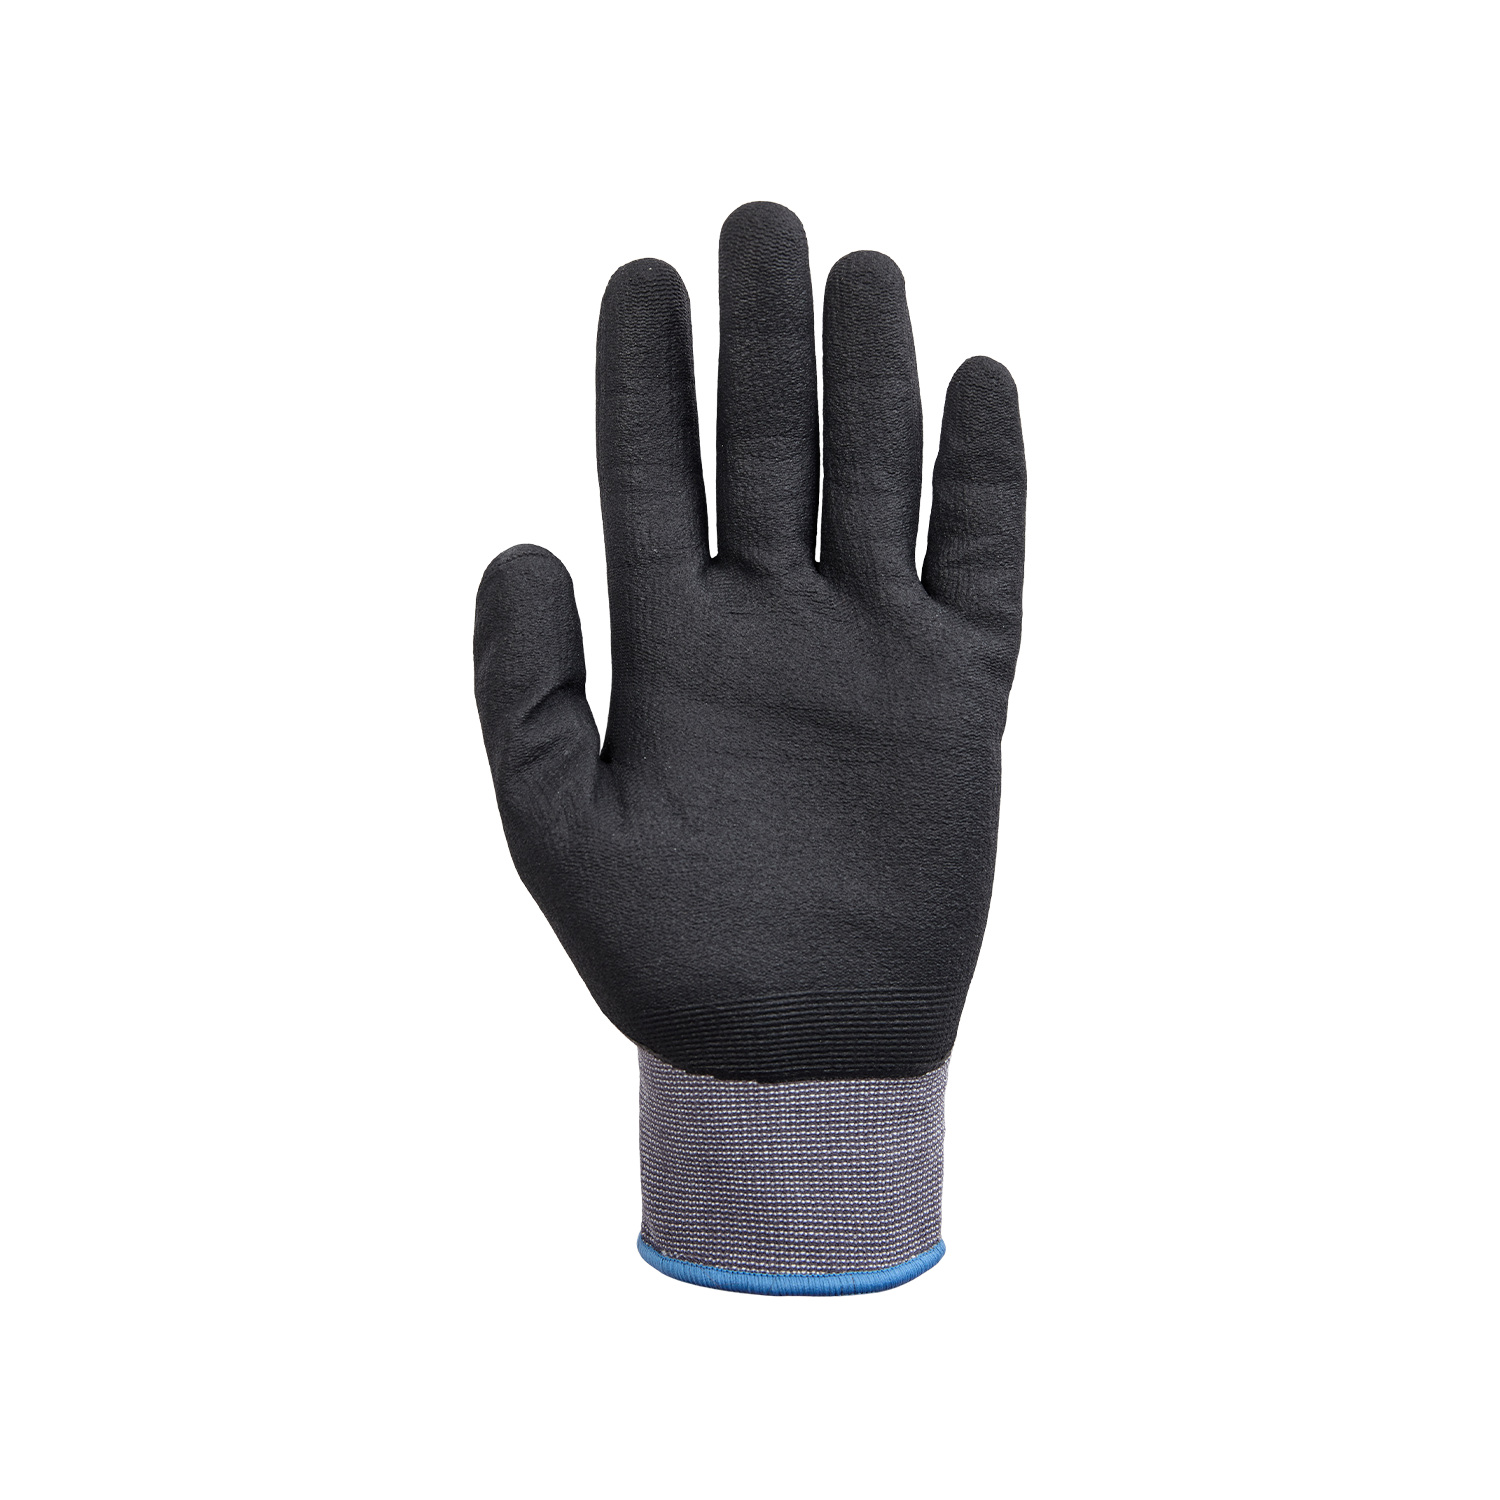 NORSE Flex Supreme assembly gloves size 12